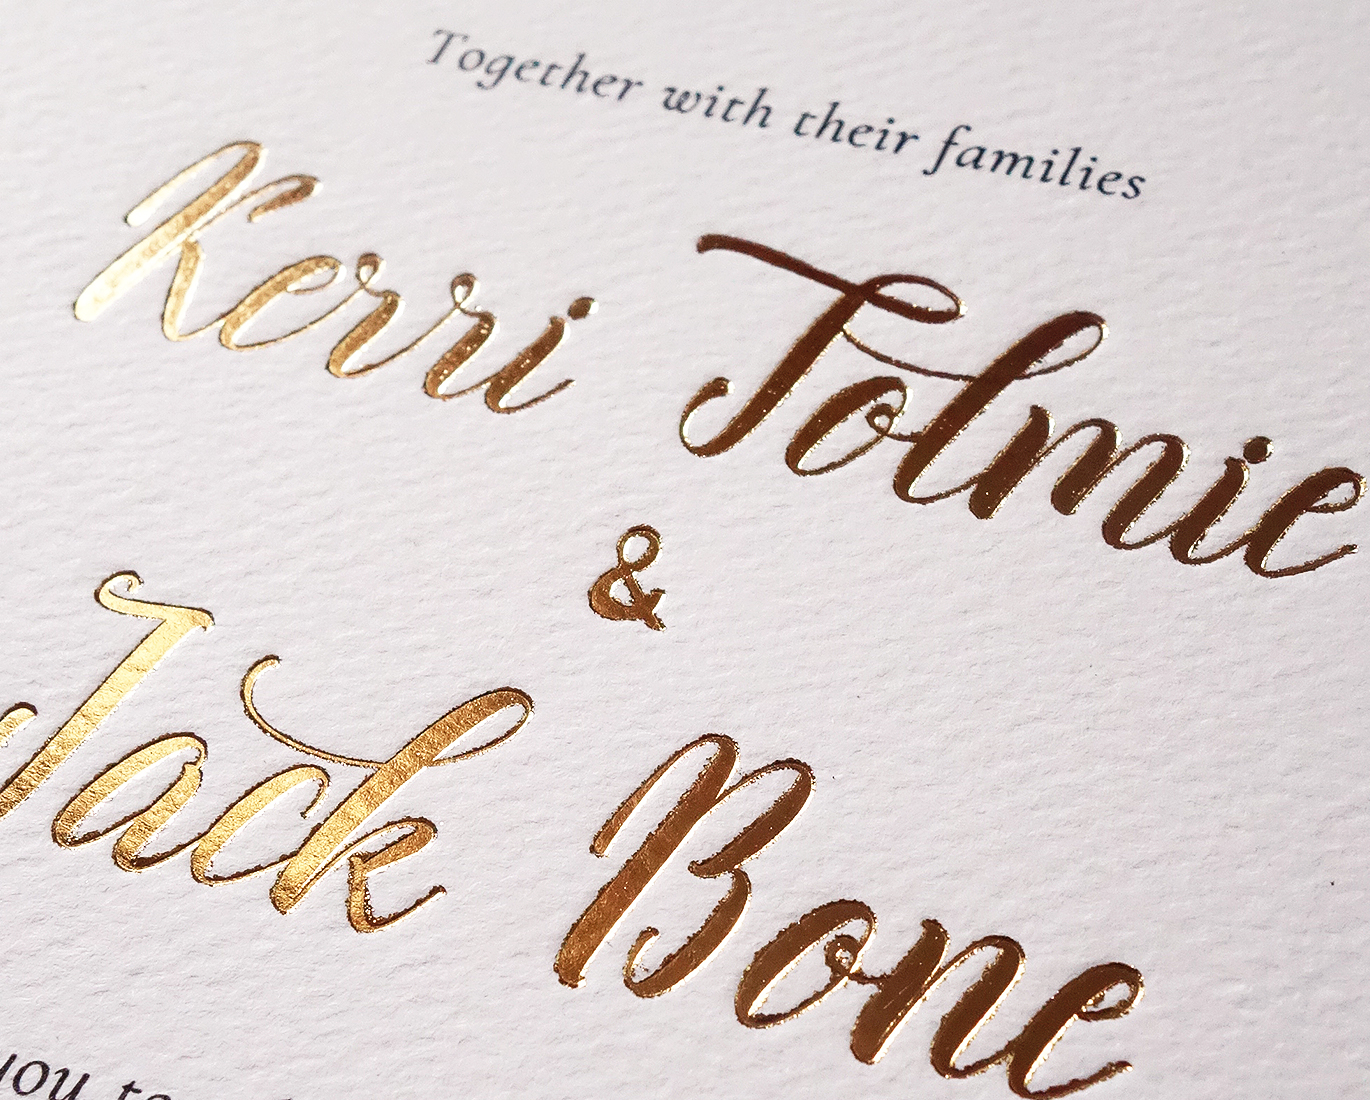 special finishing digital papermint custom wedding invitation and stationery design